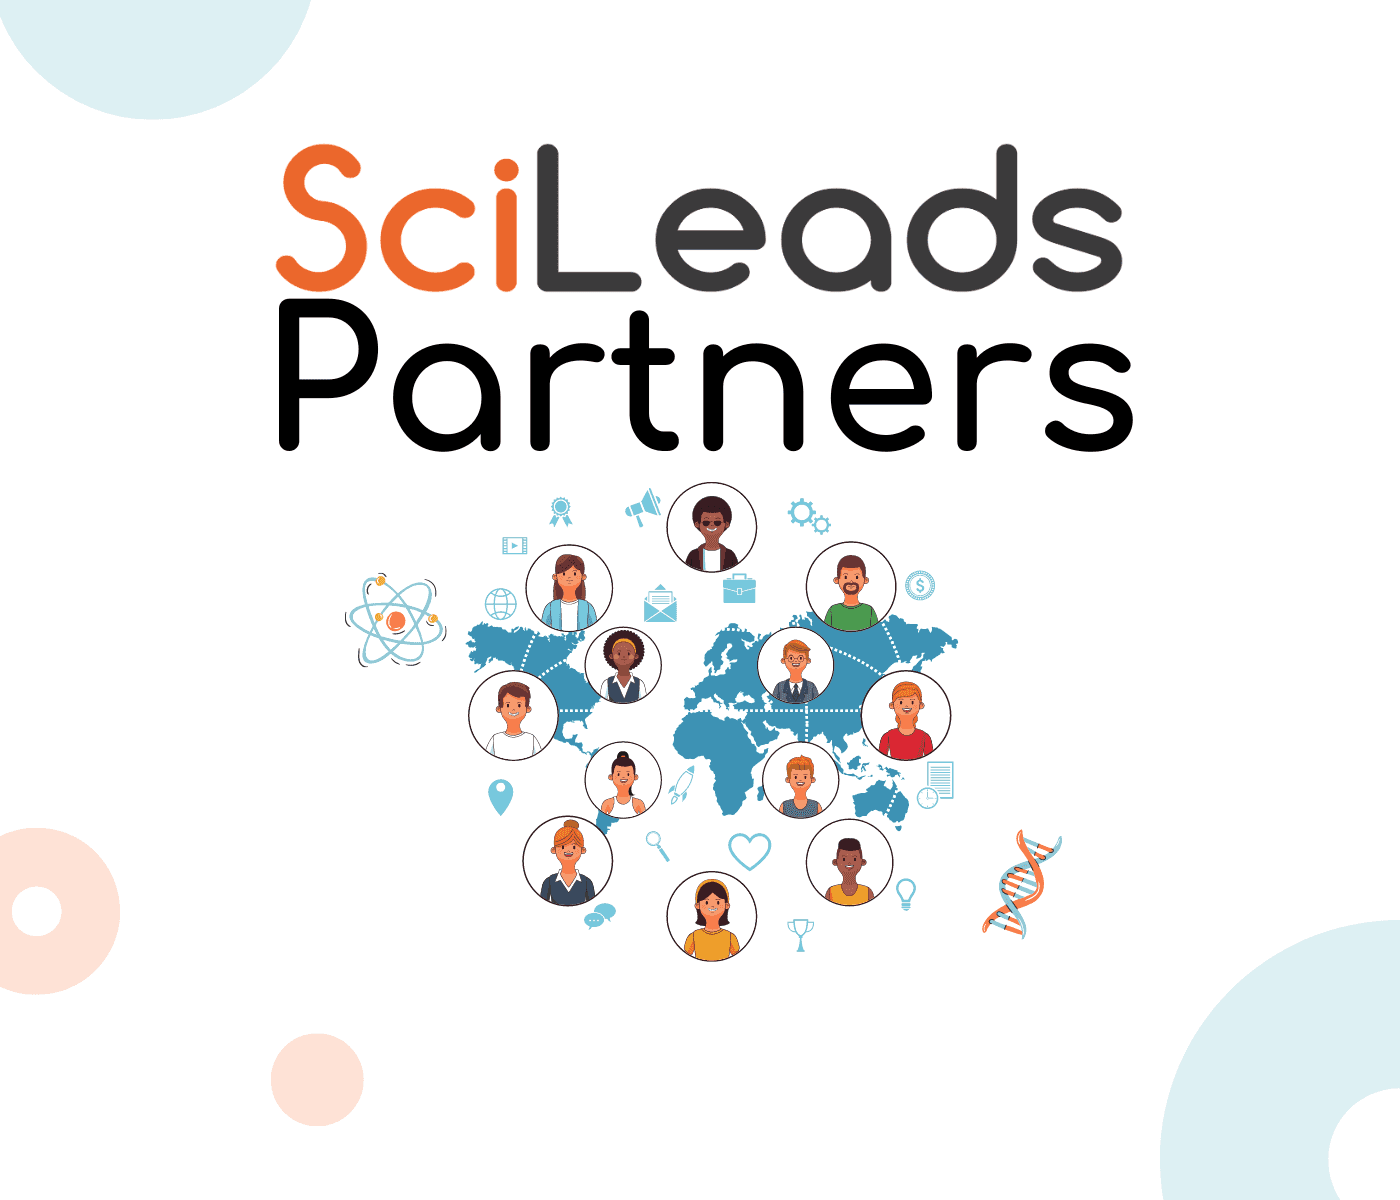 SciLeads' Partners